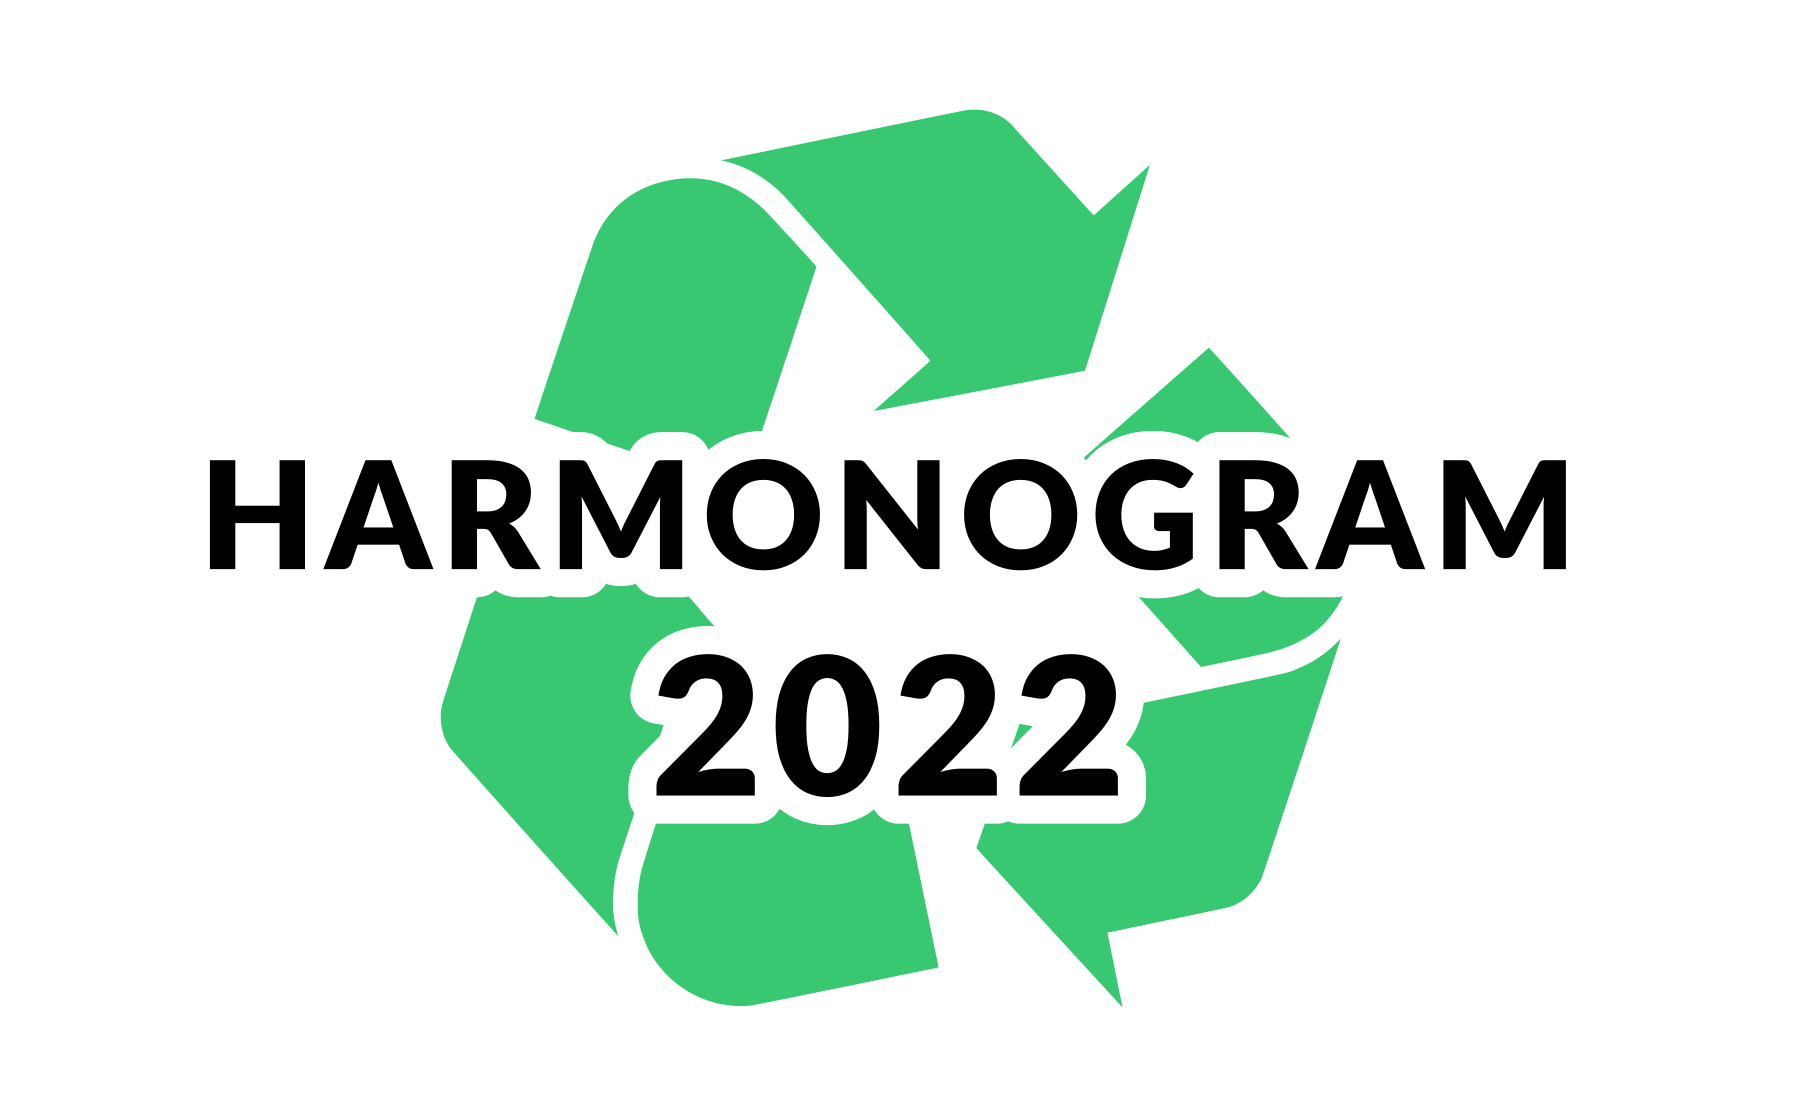 Grafika z napisem Harmonogram 2022 